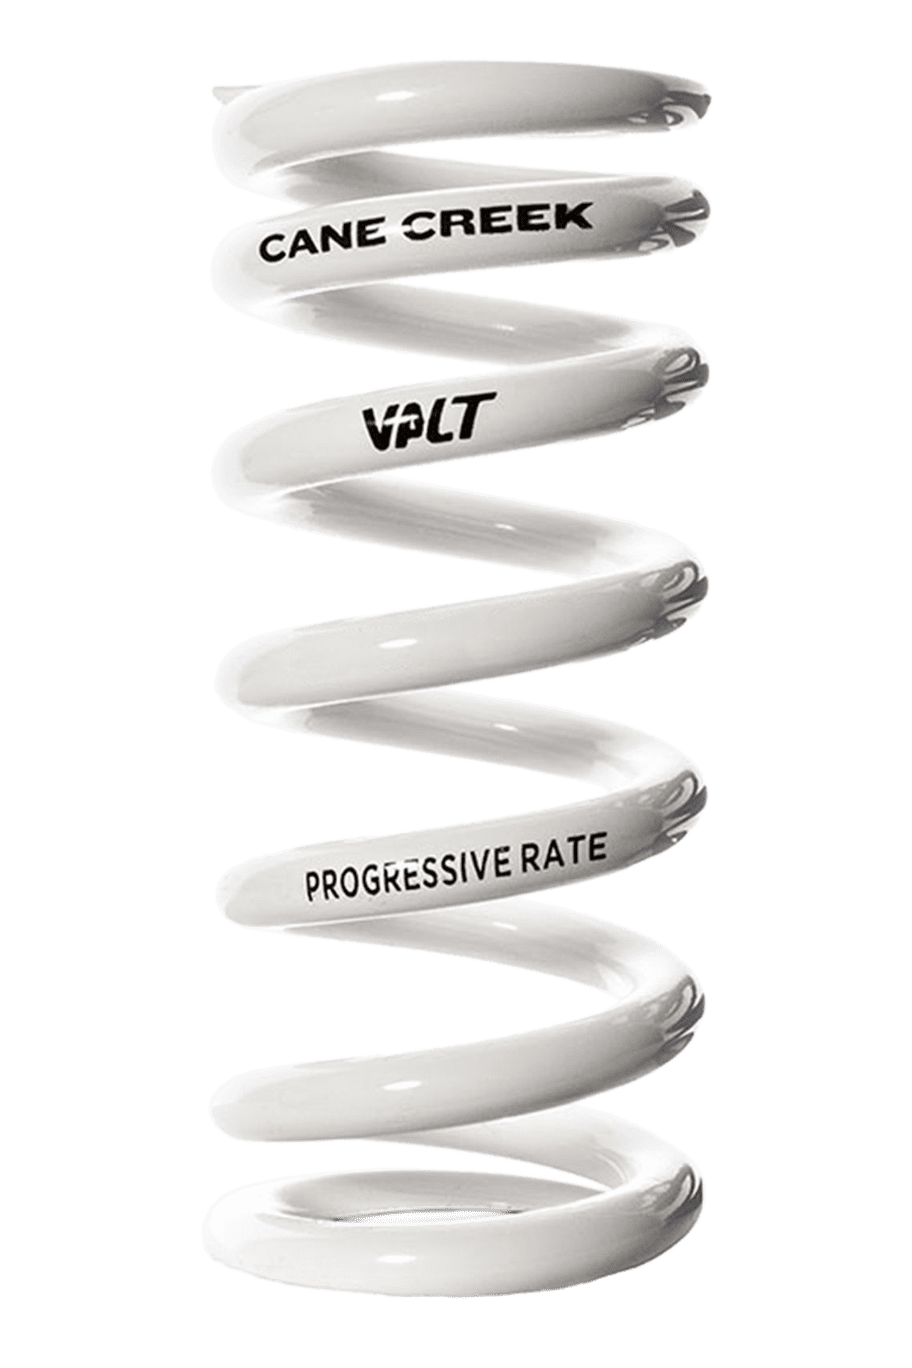 Cane Creek Progressive Rate VALT Lightweight Rear Shock Spring - 45mm x 550-670lbs White